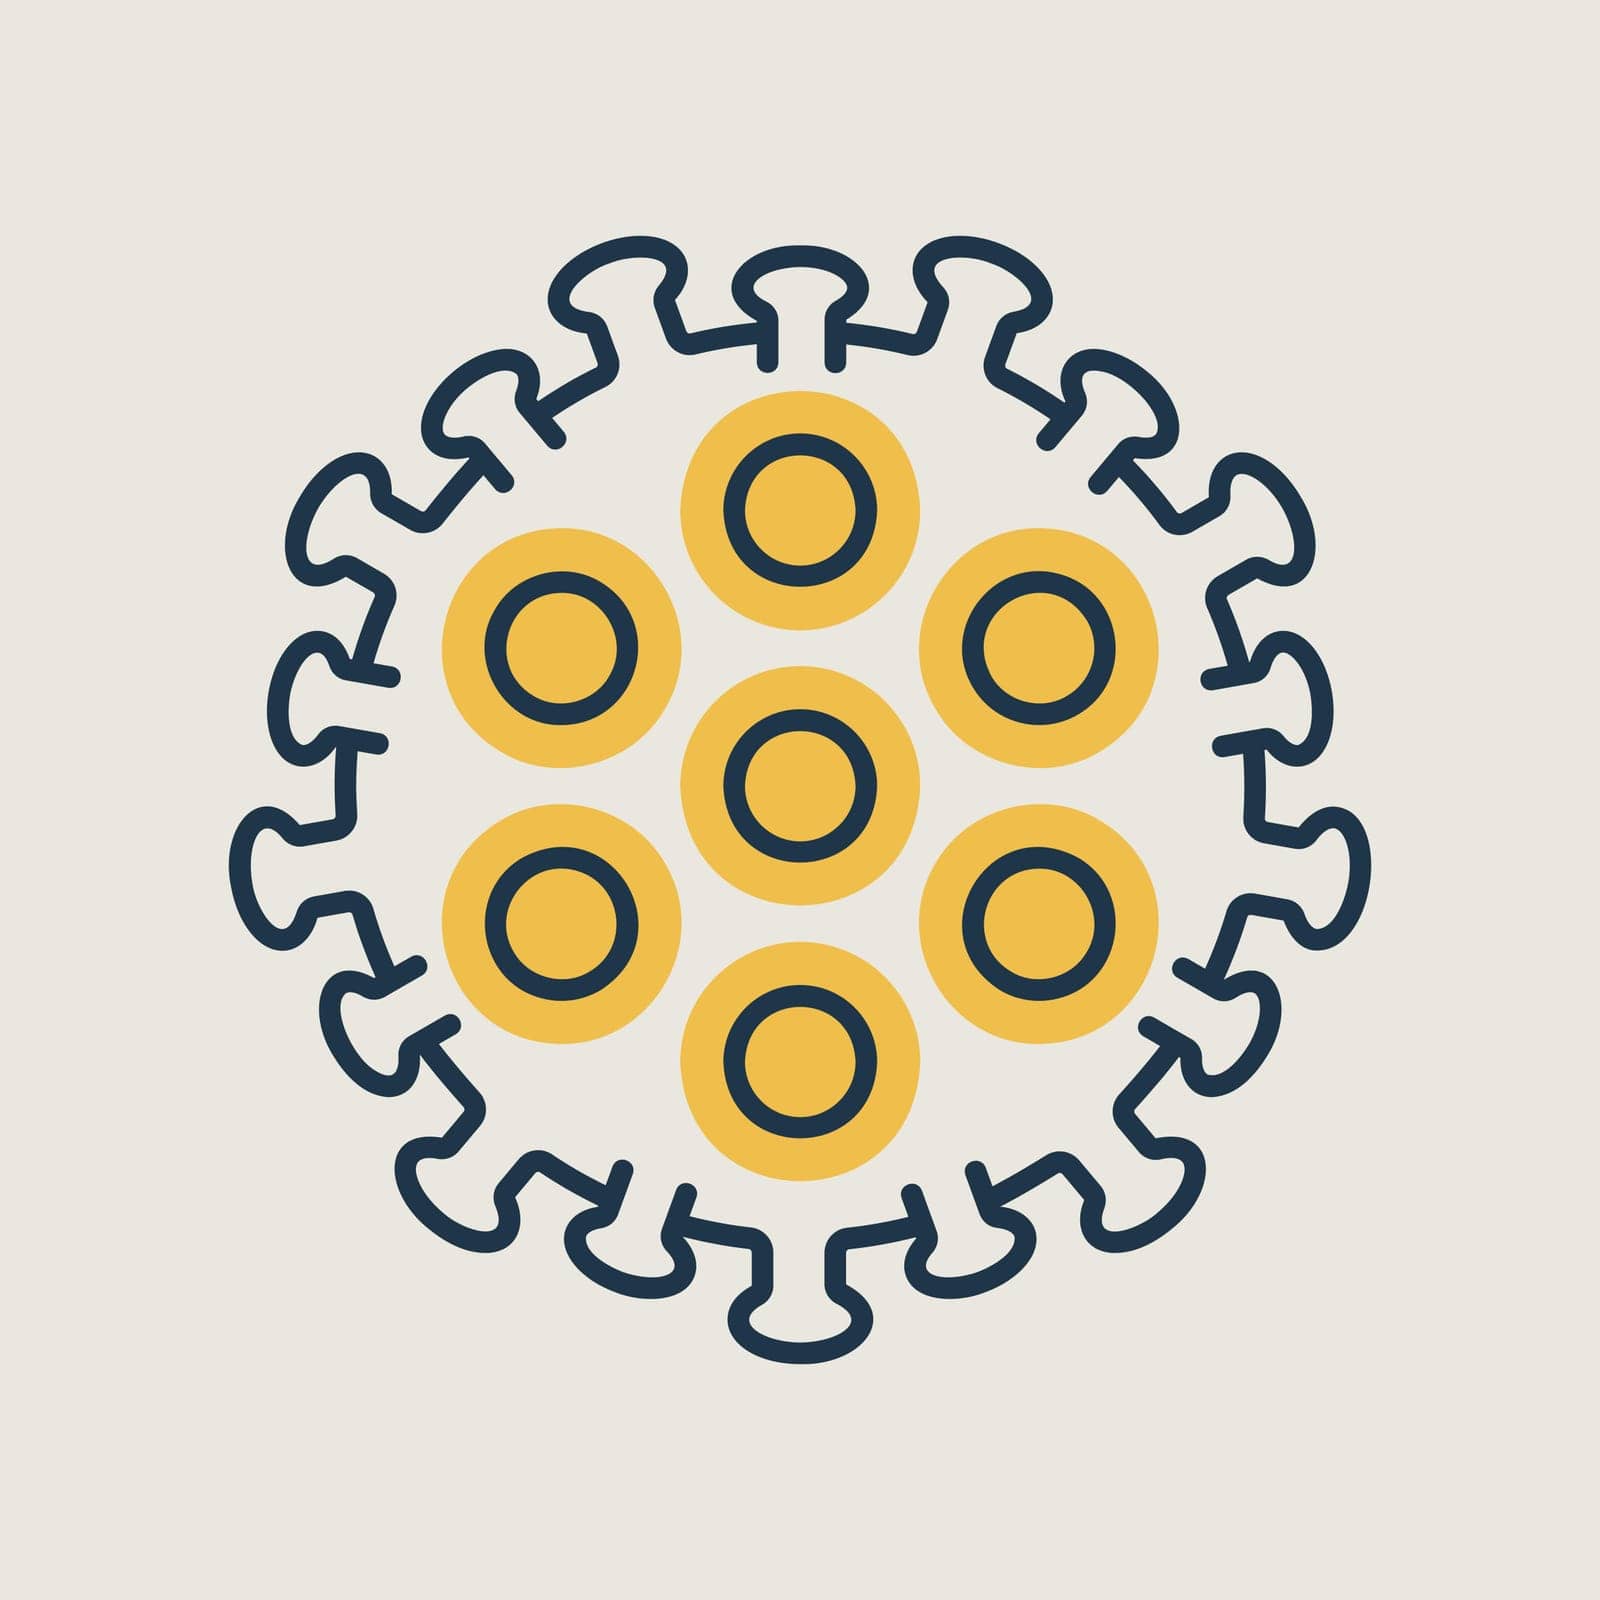 Coronavirus Bacteria 2019-nCoV vector icon. Medicine sign. Graph symbol for medical web site and apps design, logo, app, UI